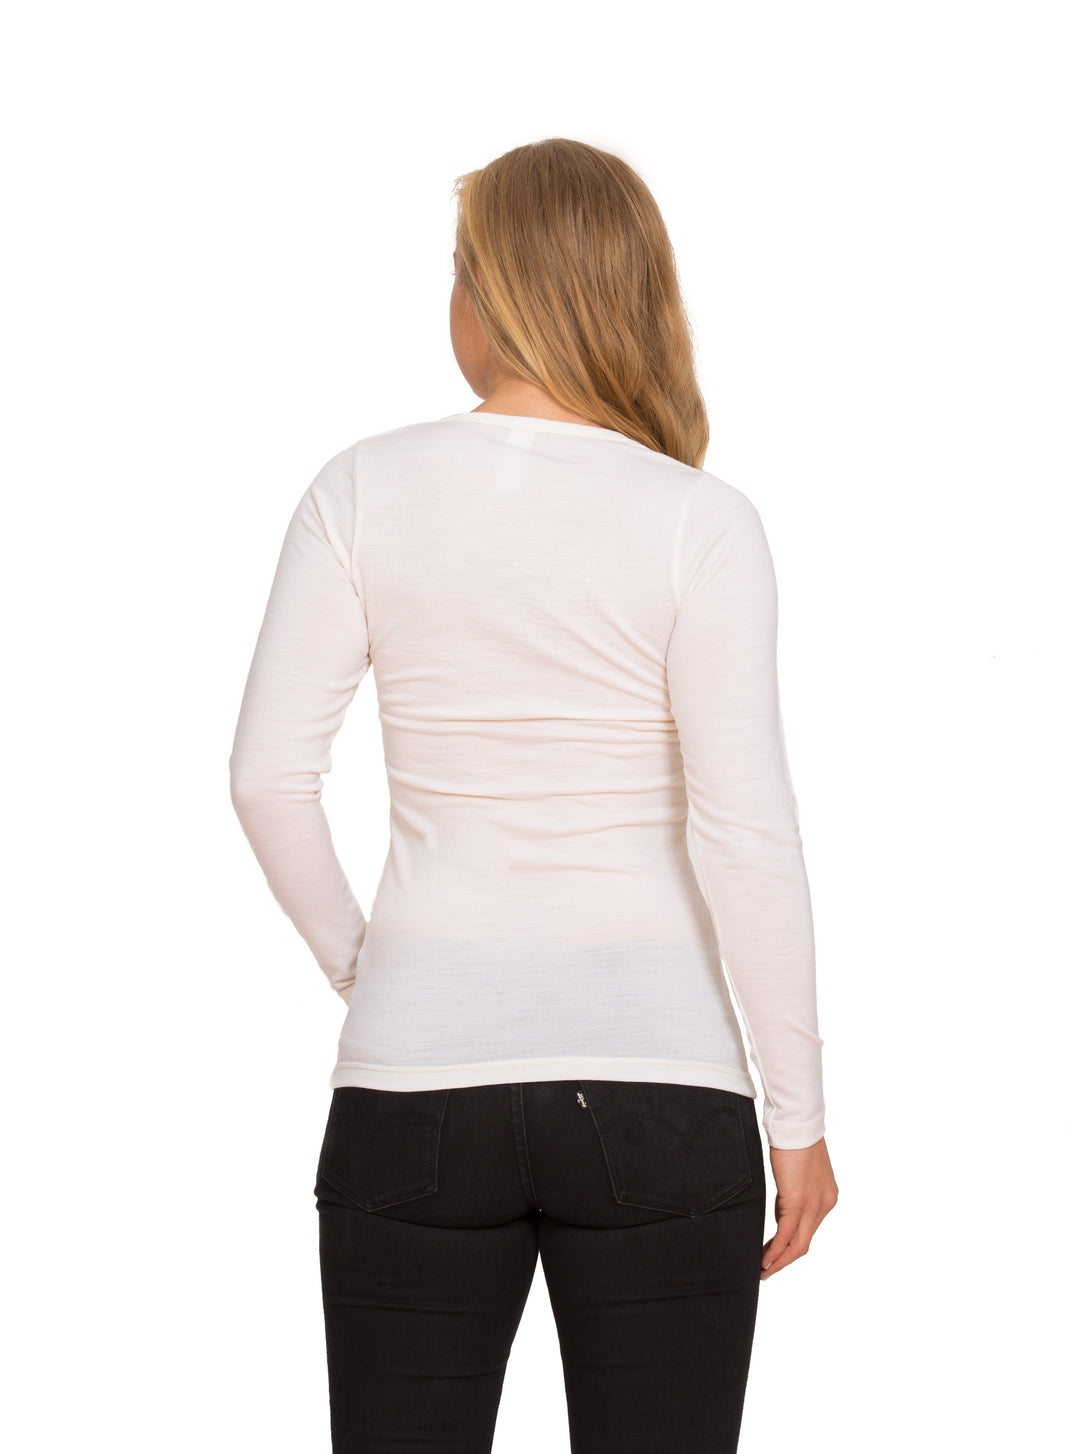 Merino Women's Long Sleeve White